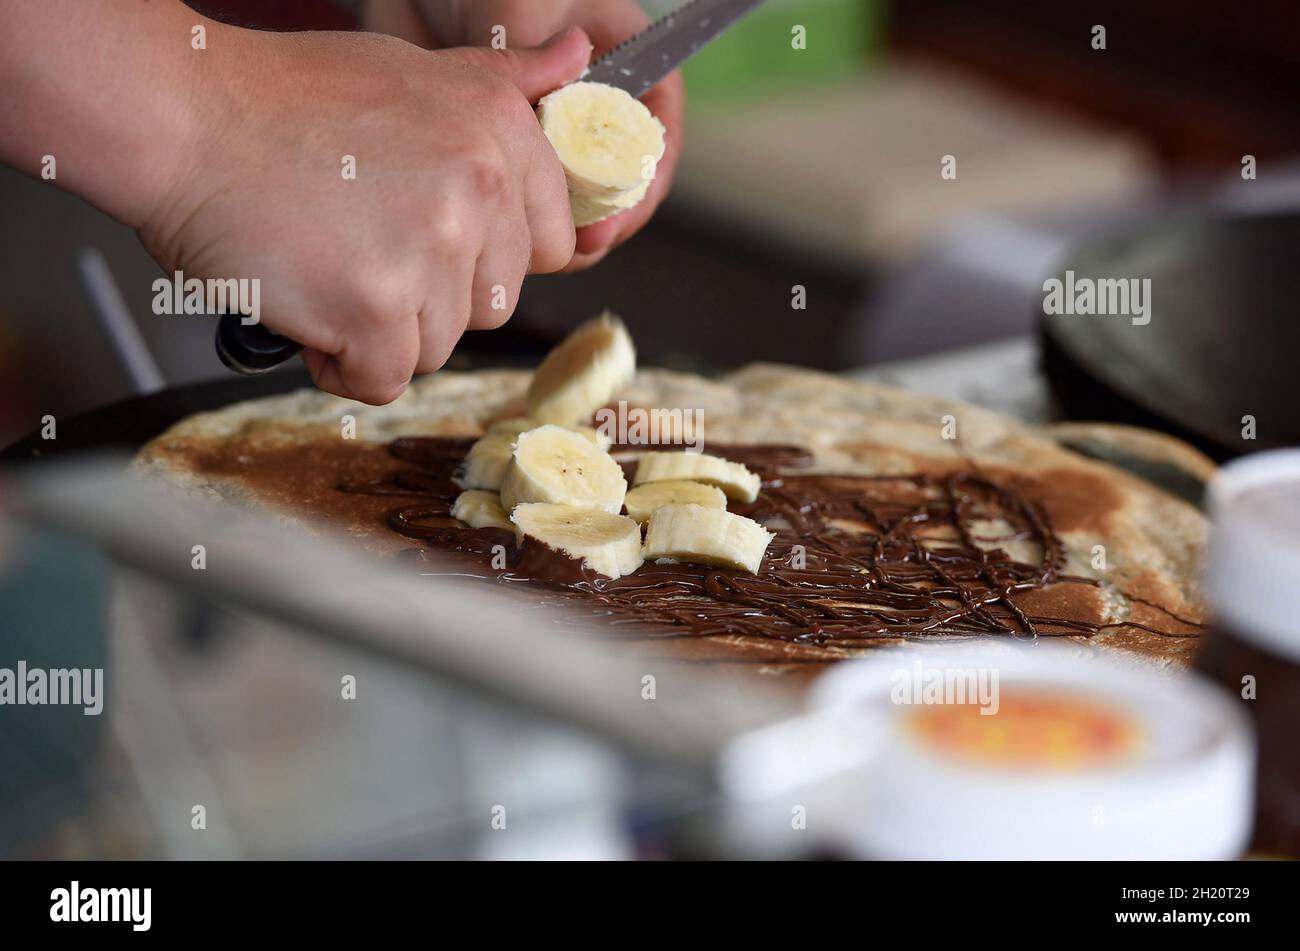 Die Süßspeise Crepes mit Schokolade und Bananen - The dessert crepes with chocolate and bananas Stock Photo